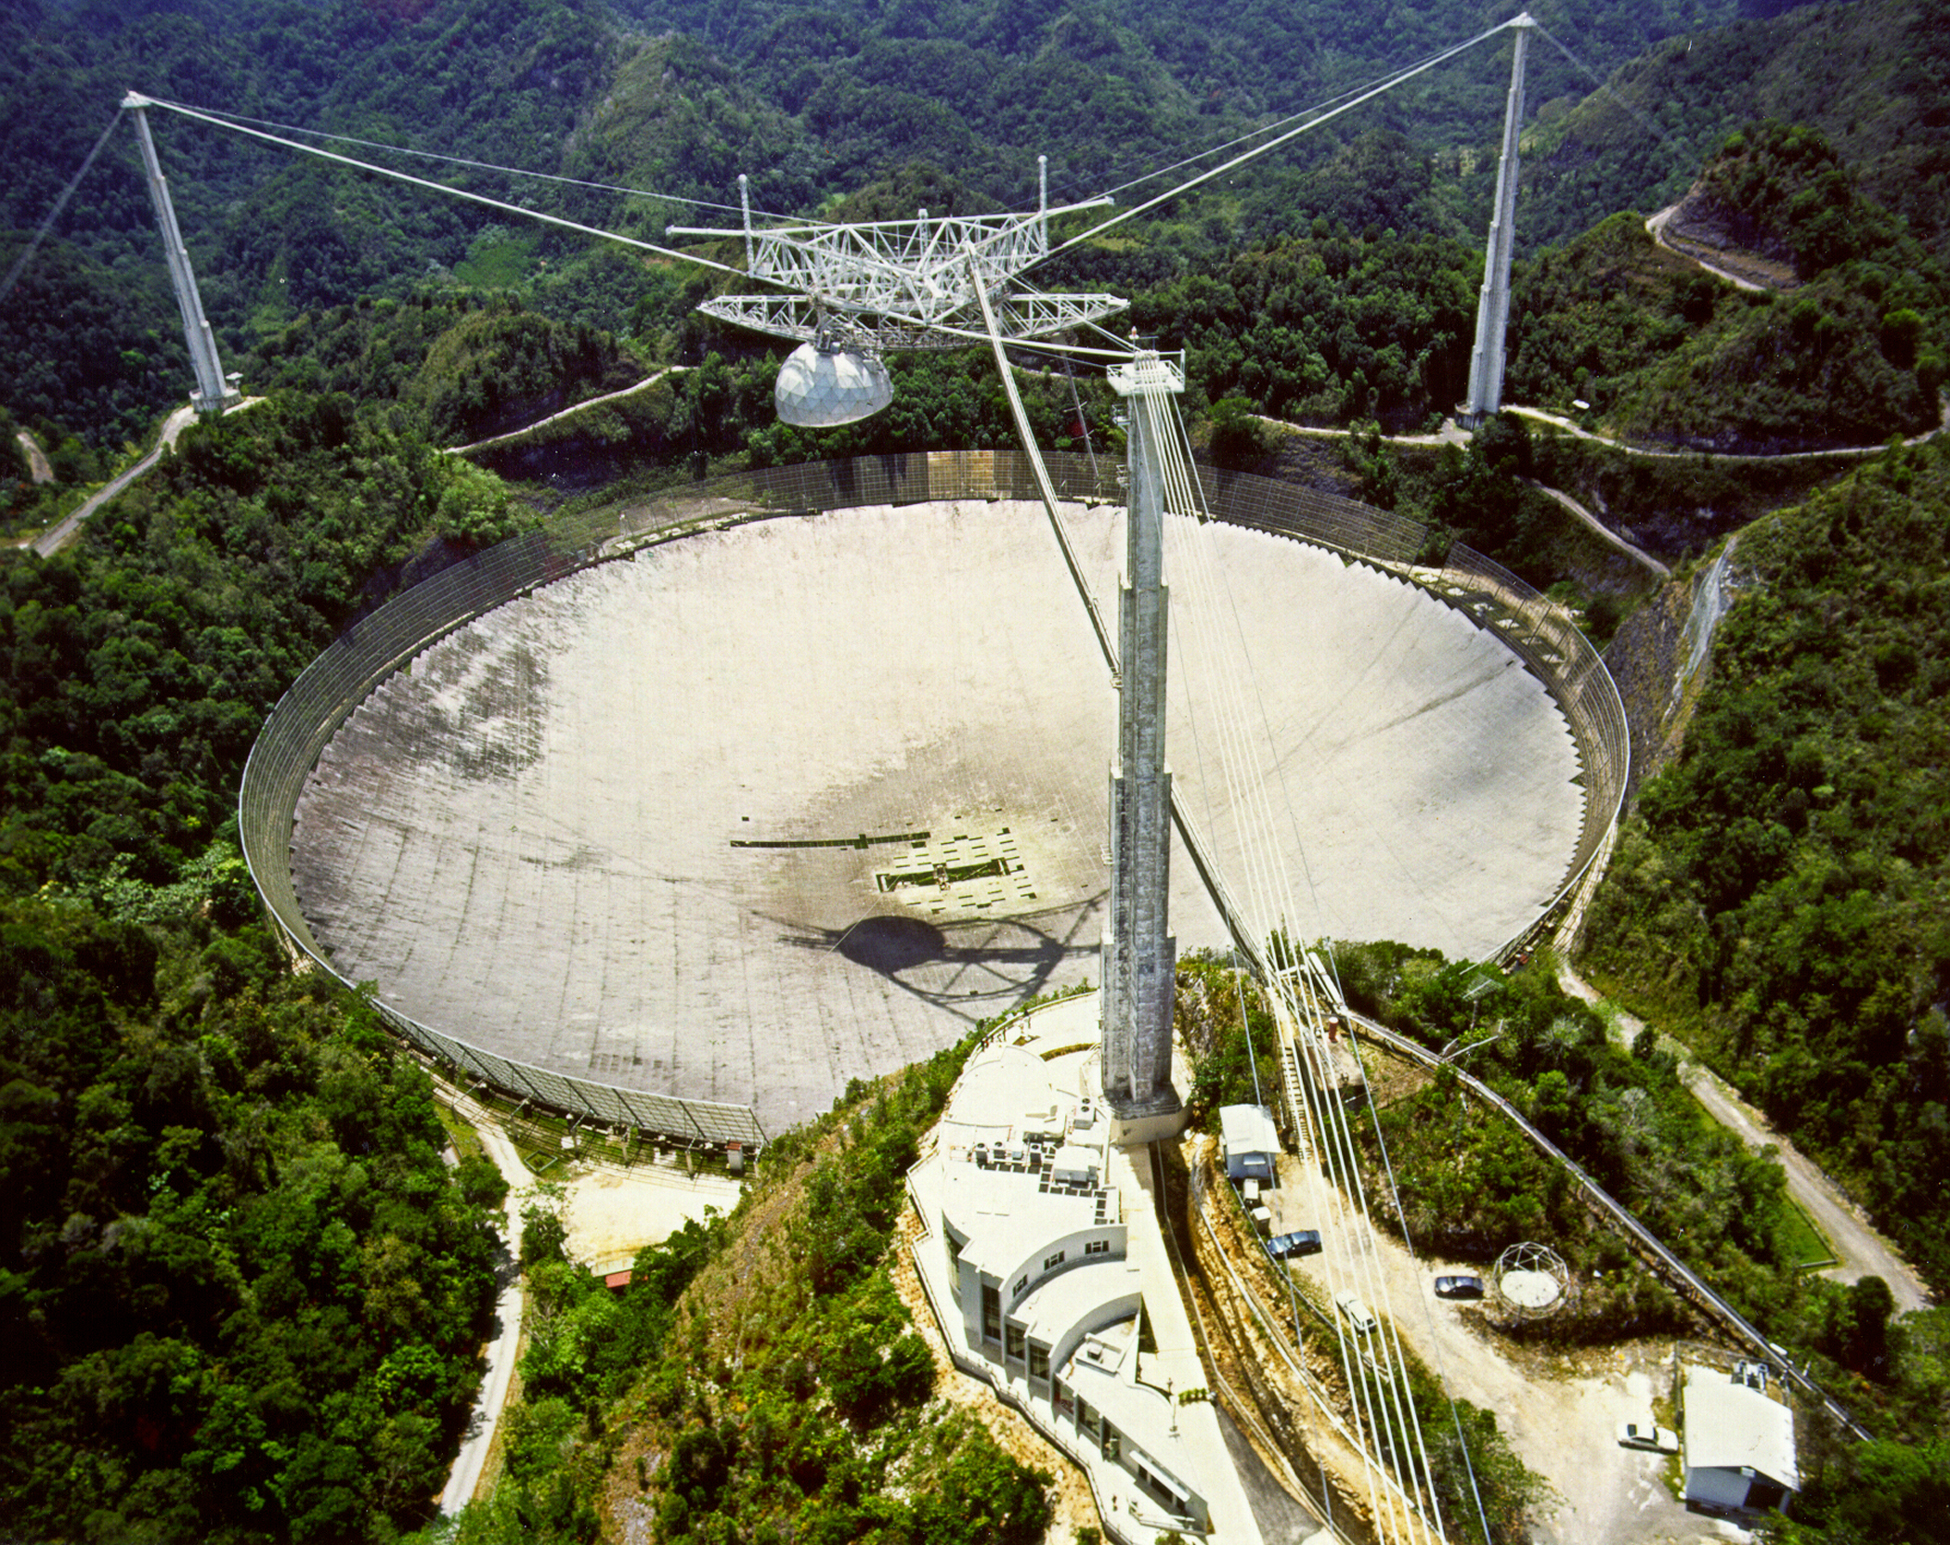 Birds-eye view of the now-defunct Arecibo Telescope